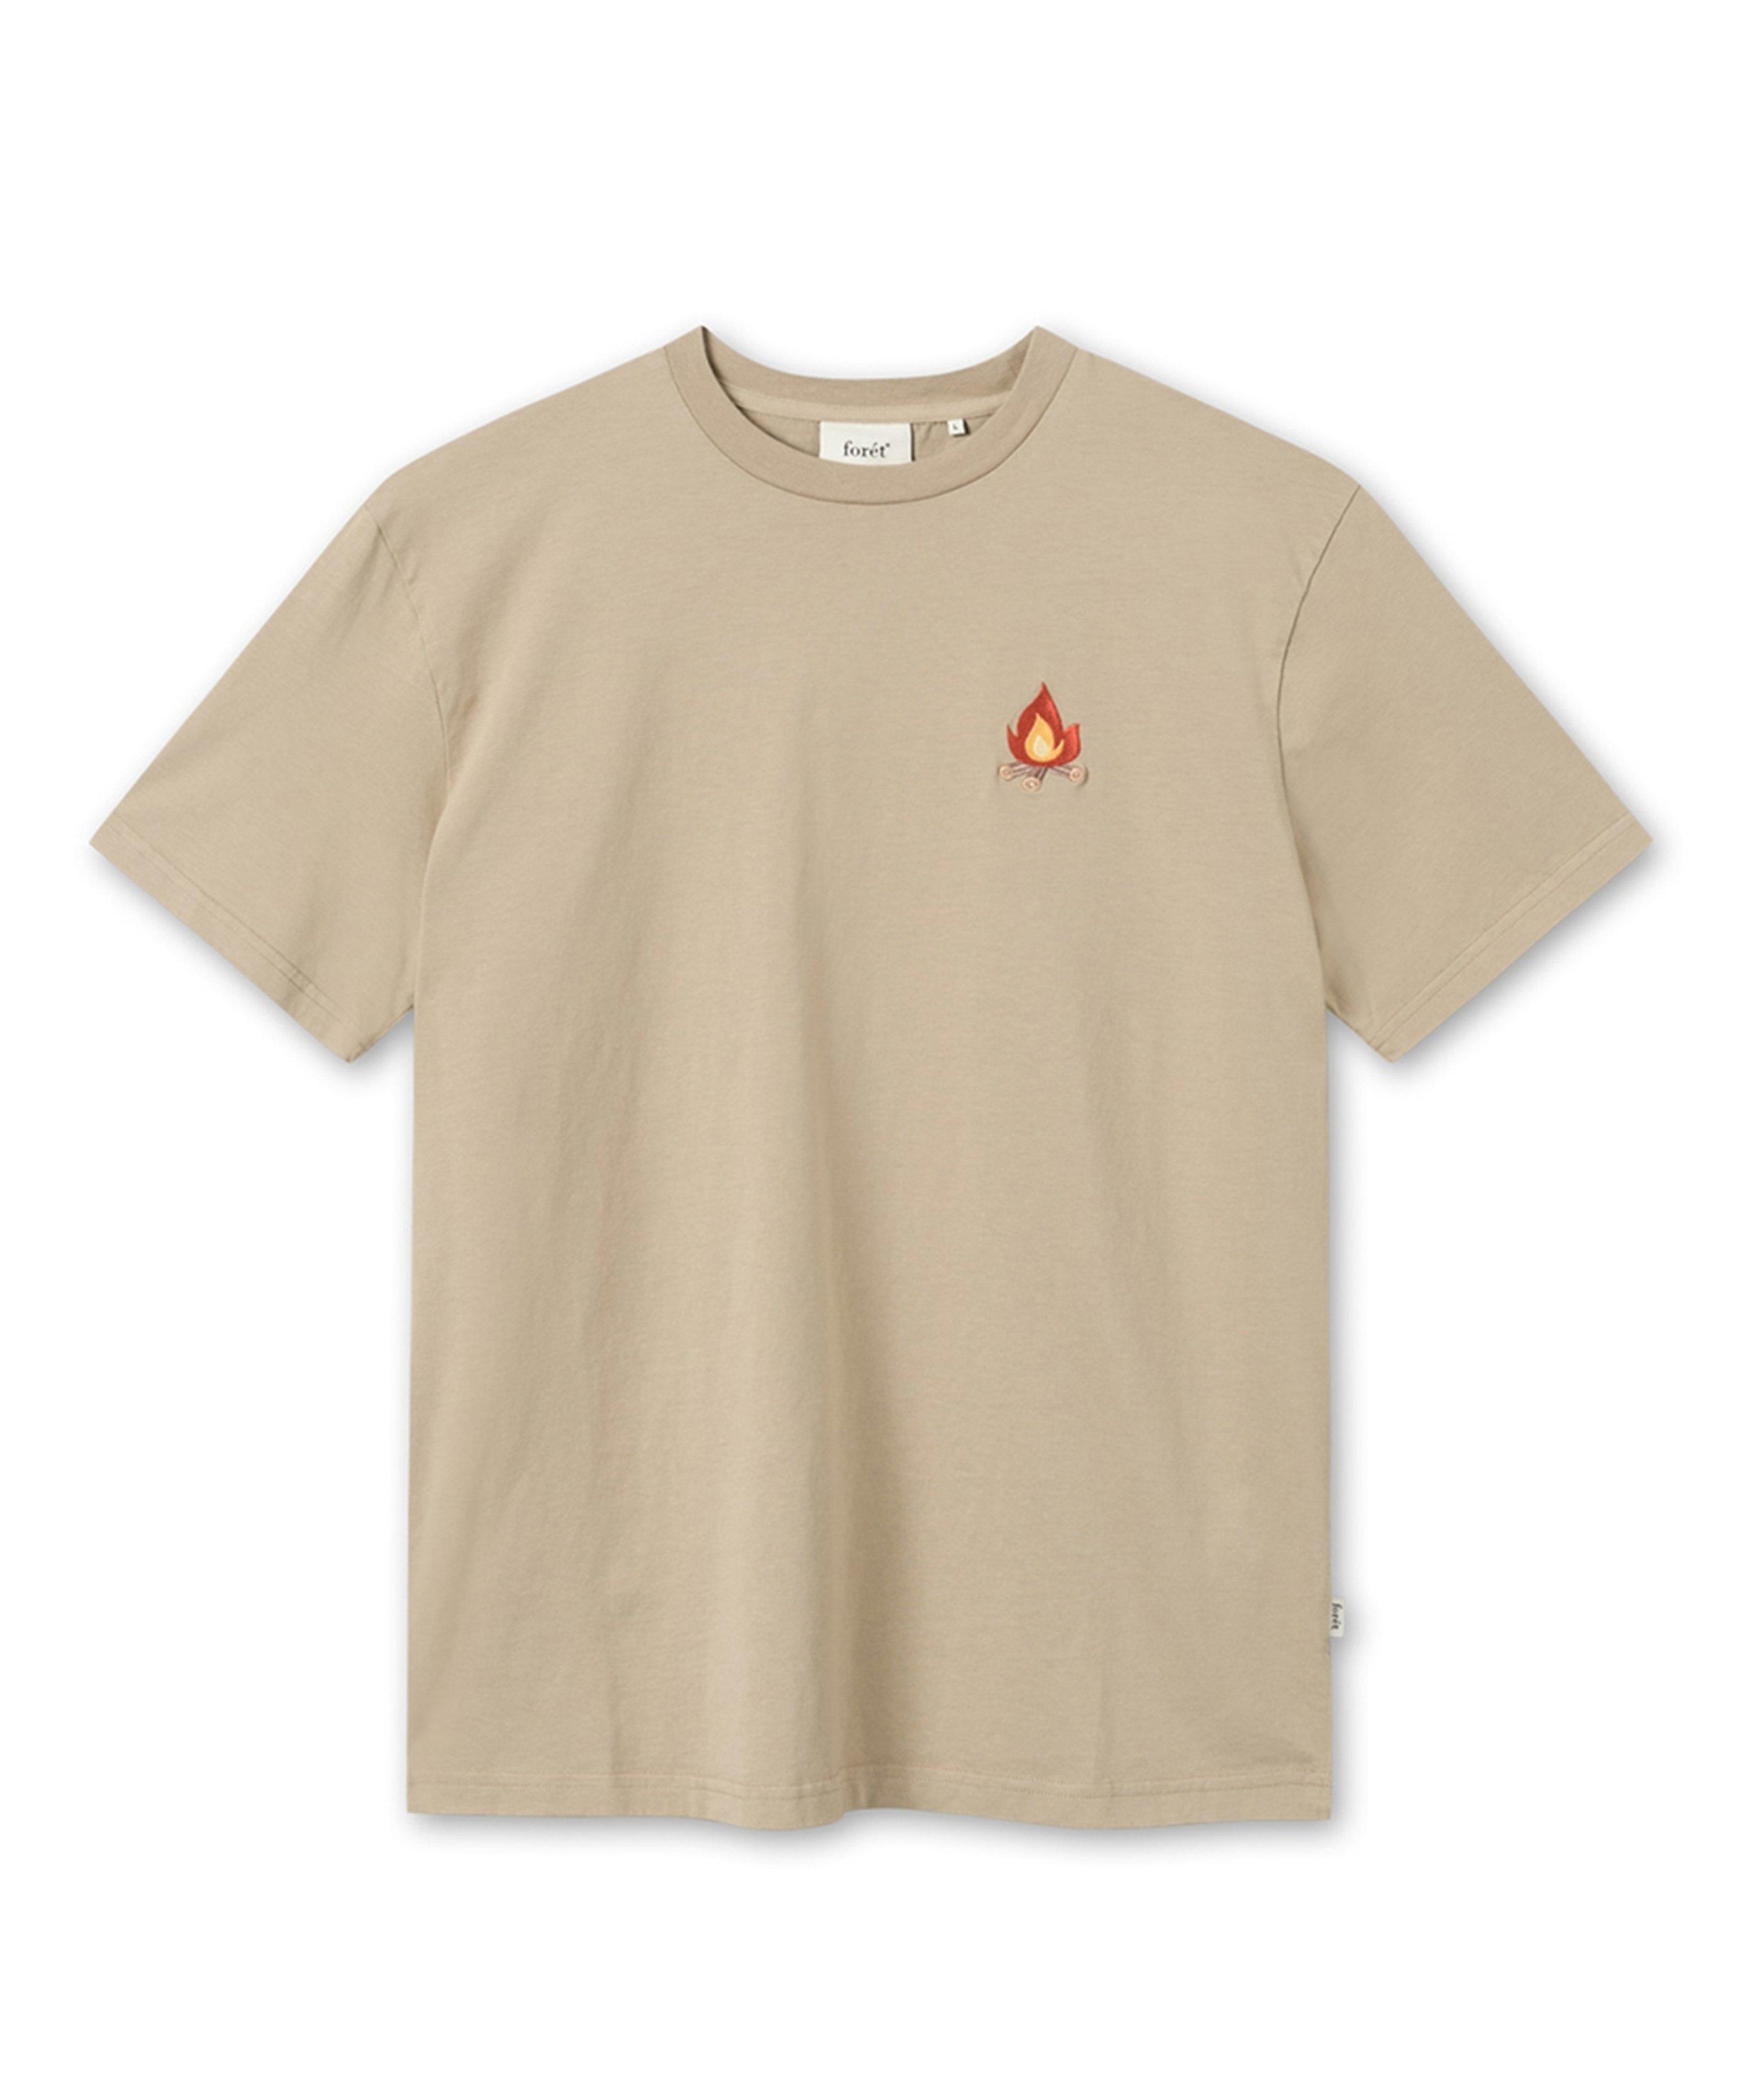 T-shirt Glow en coton image 0